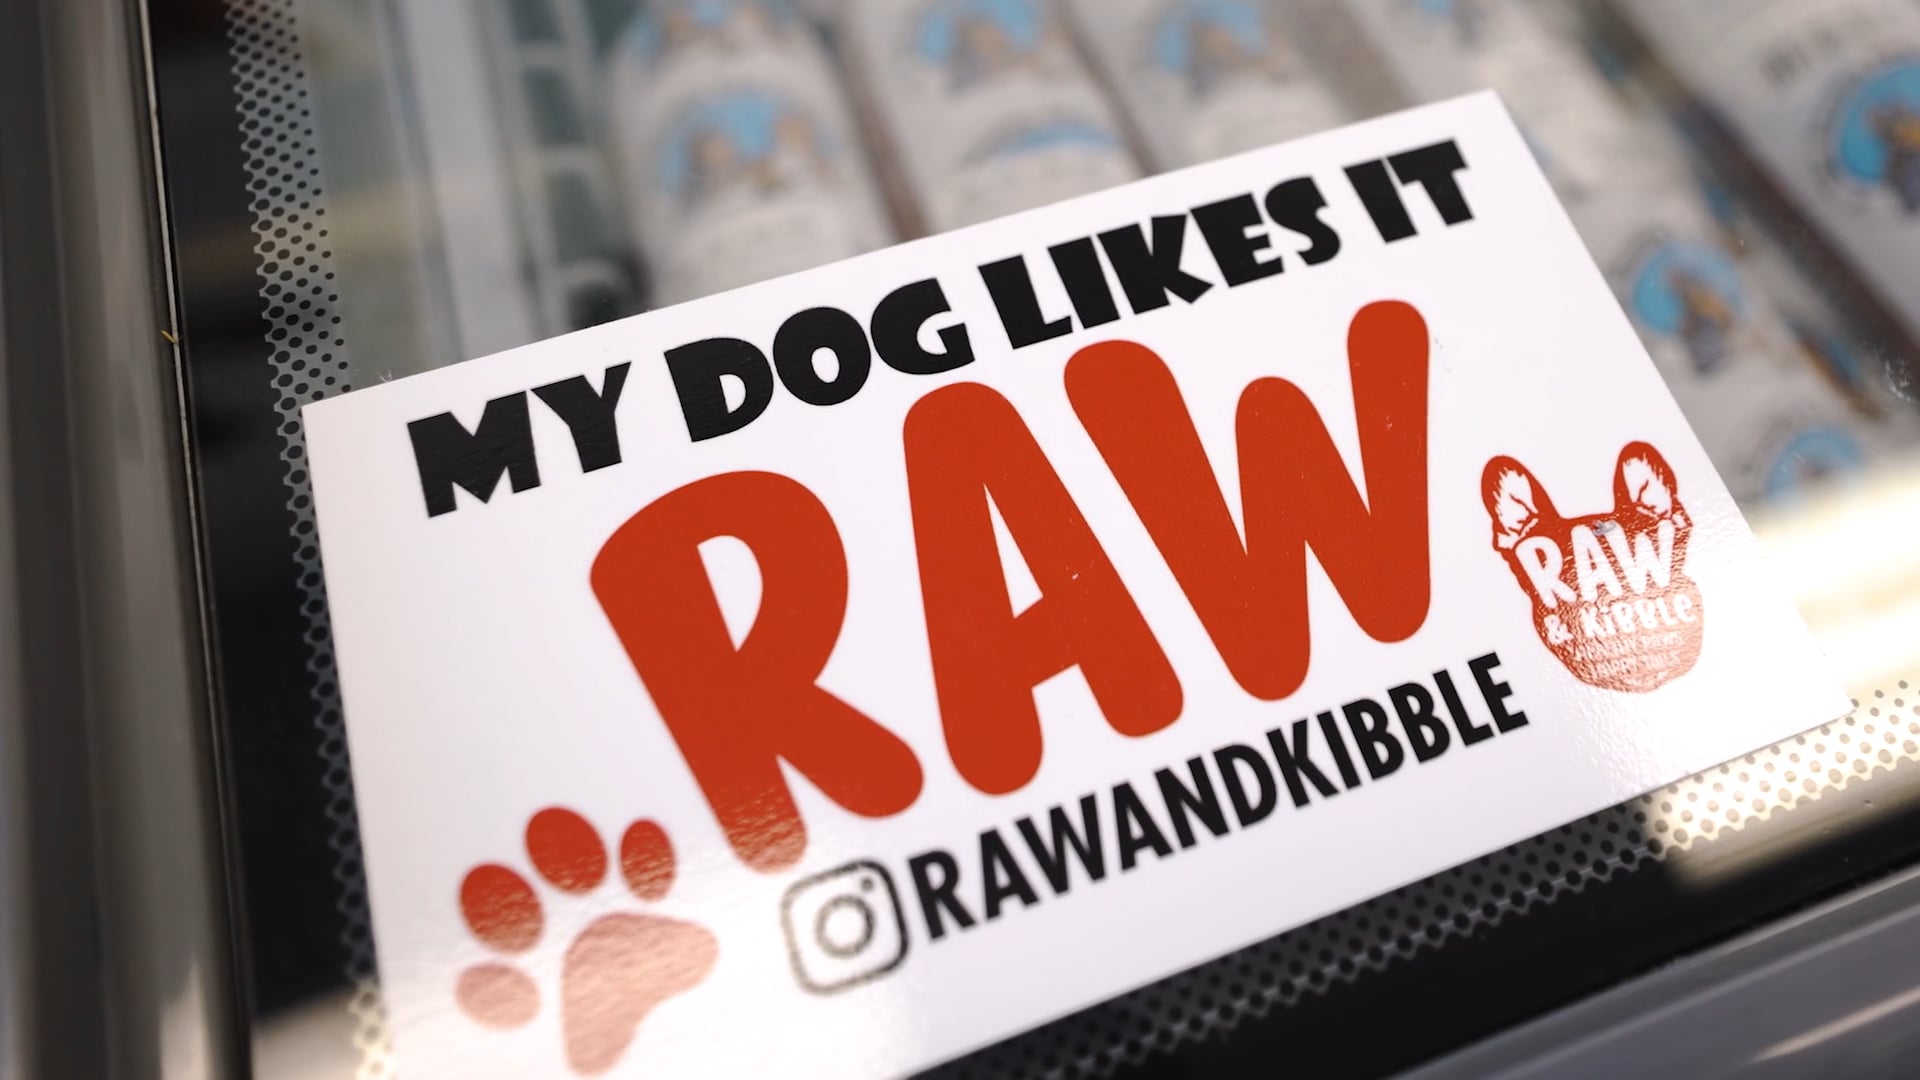 Raw And Kibble 1 min Social Media